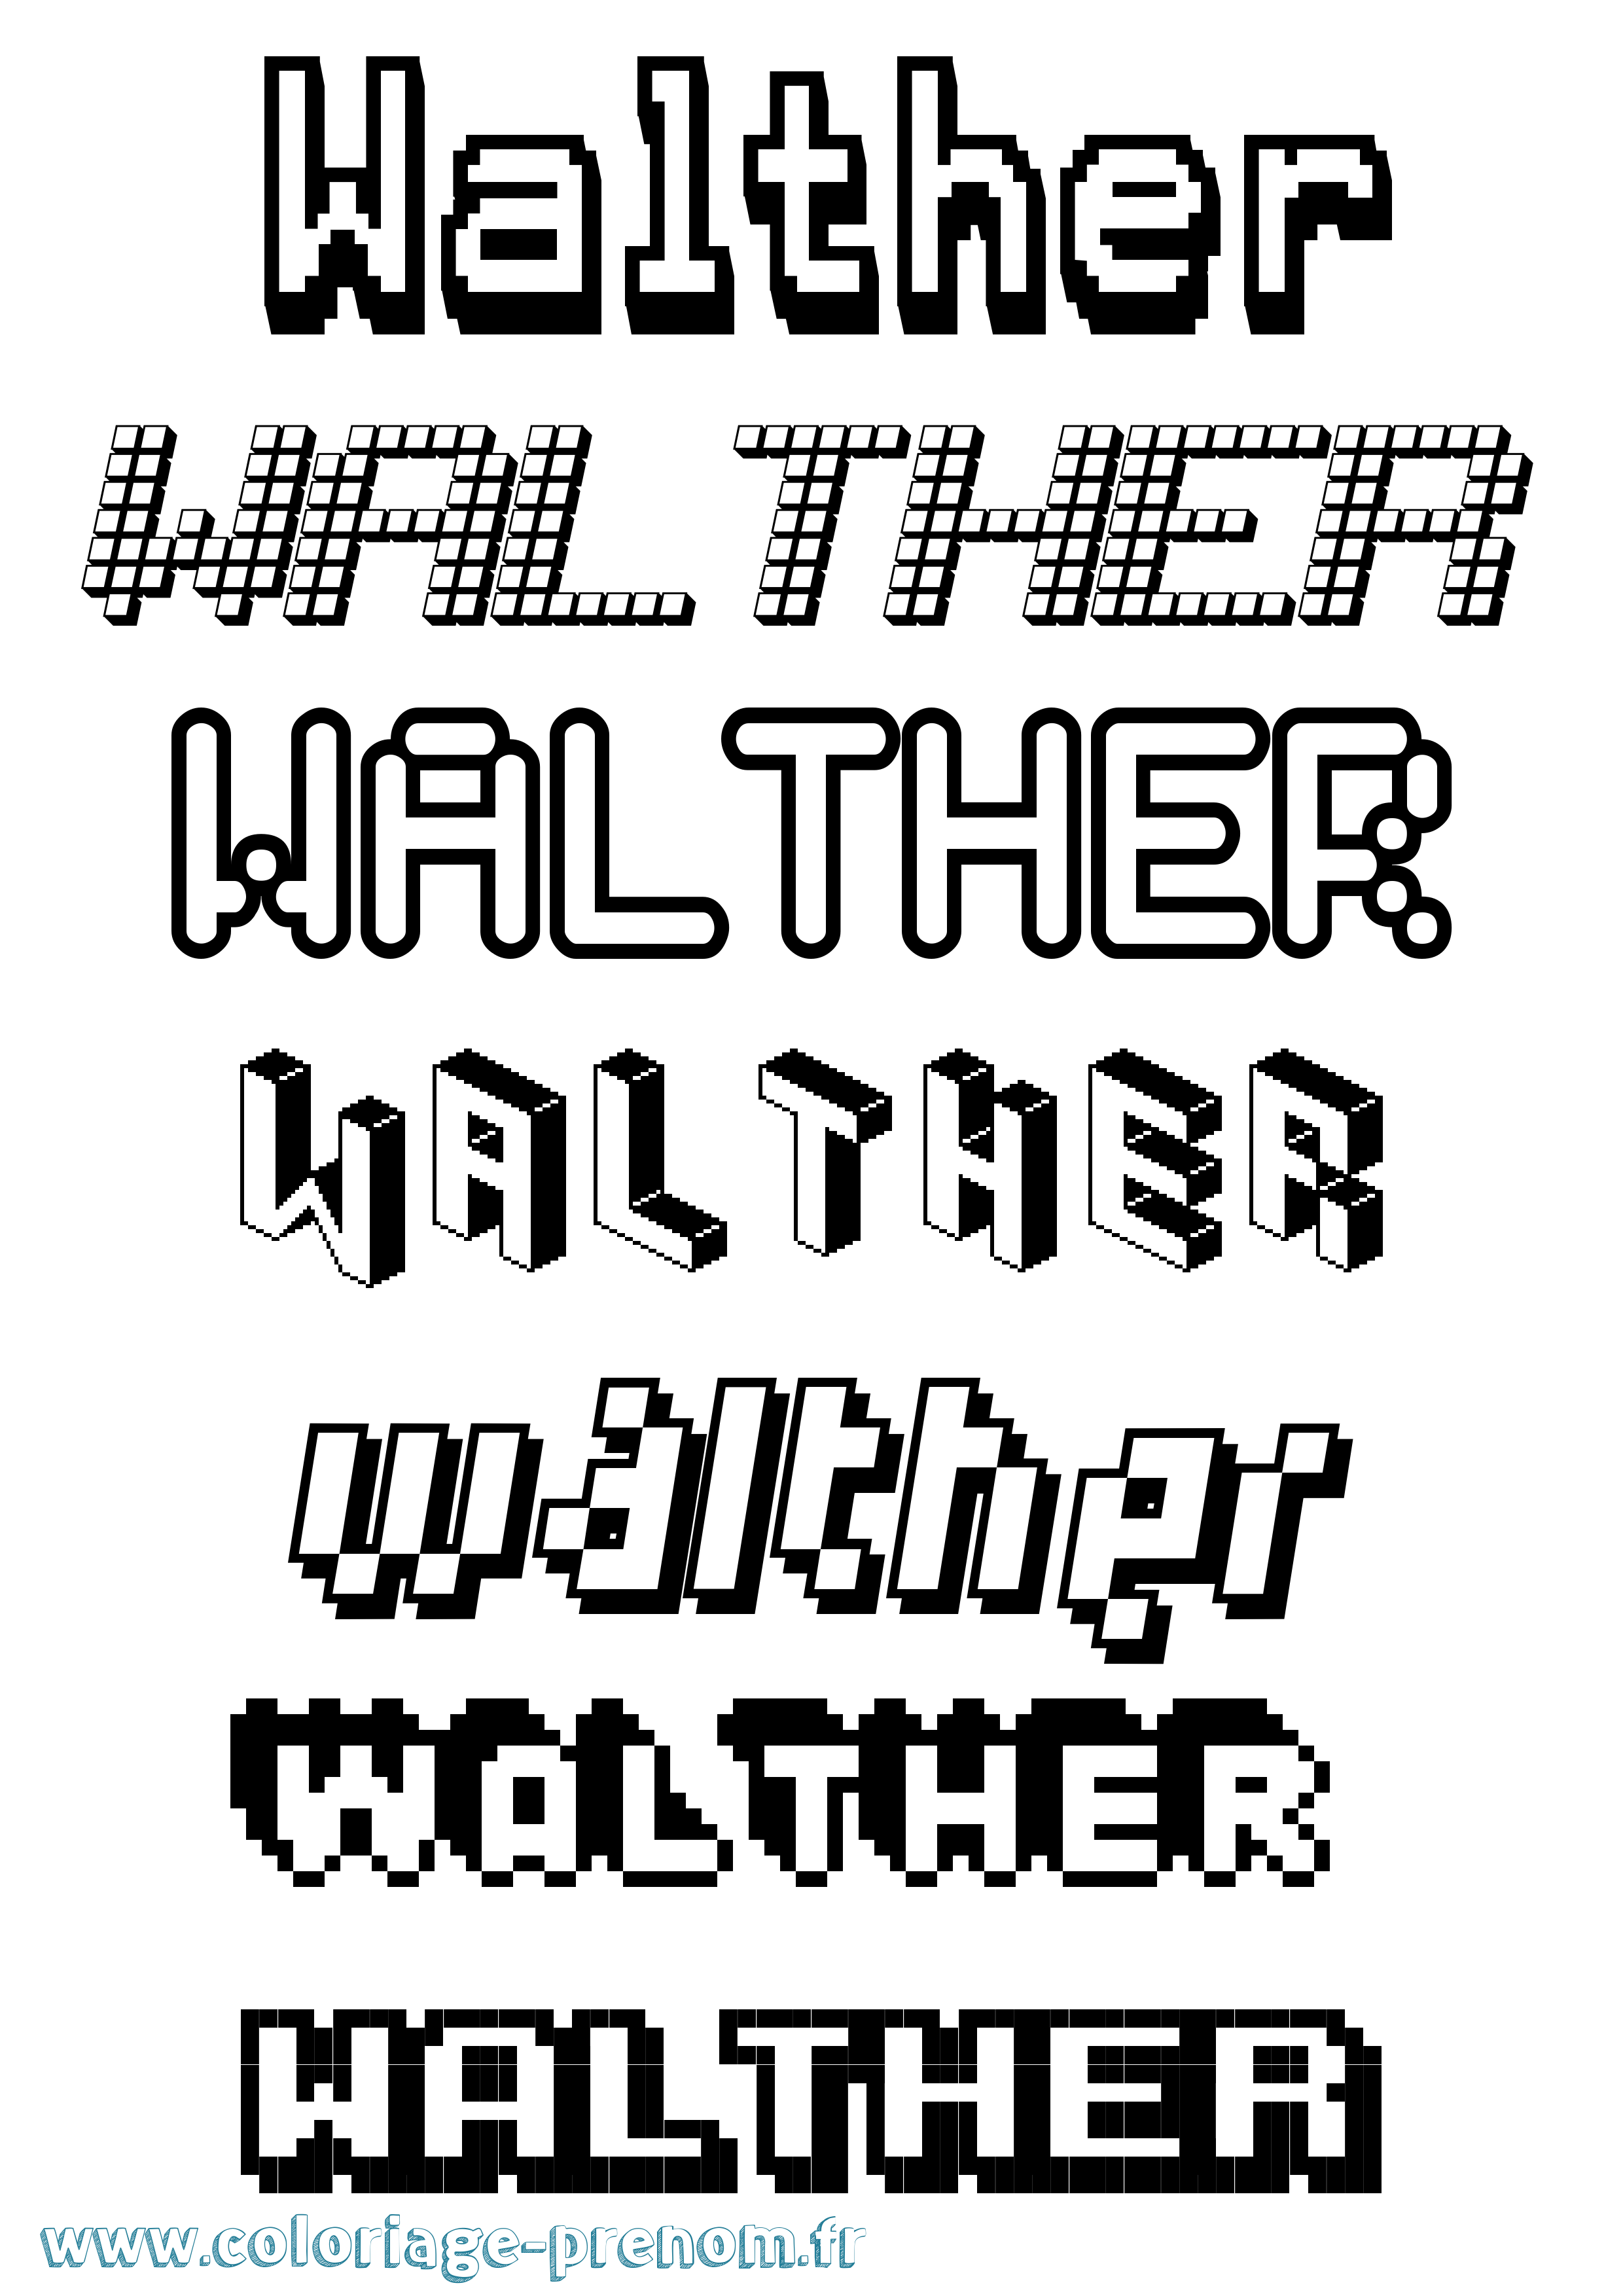 Coloriage prénom Walther Pixel